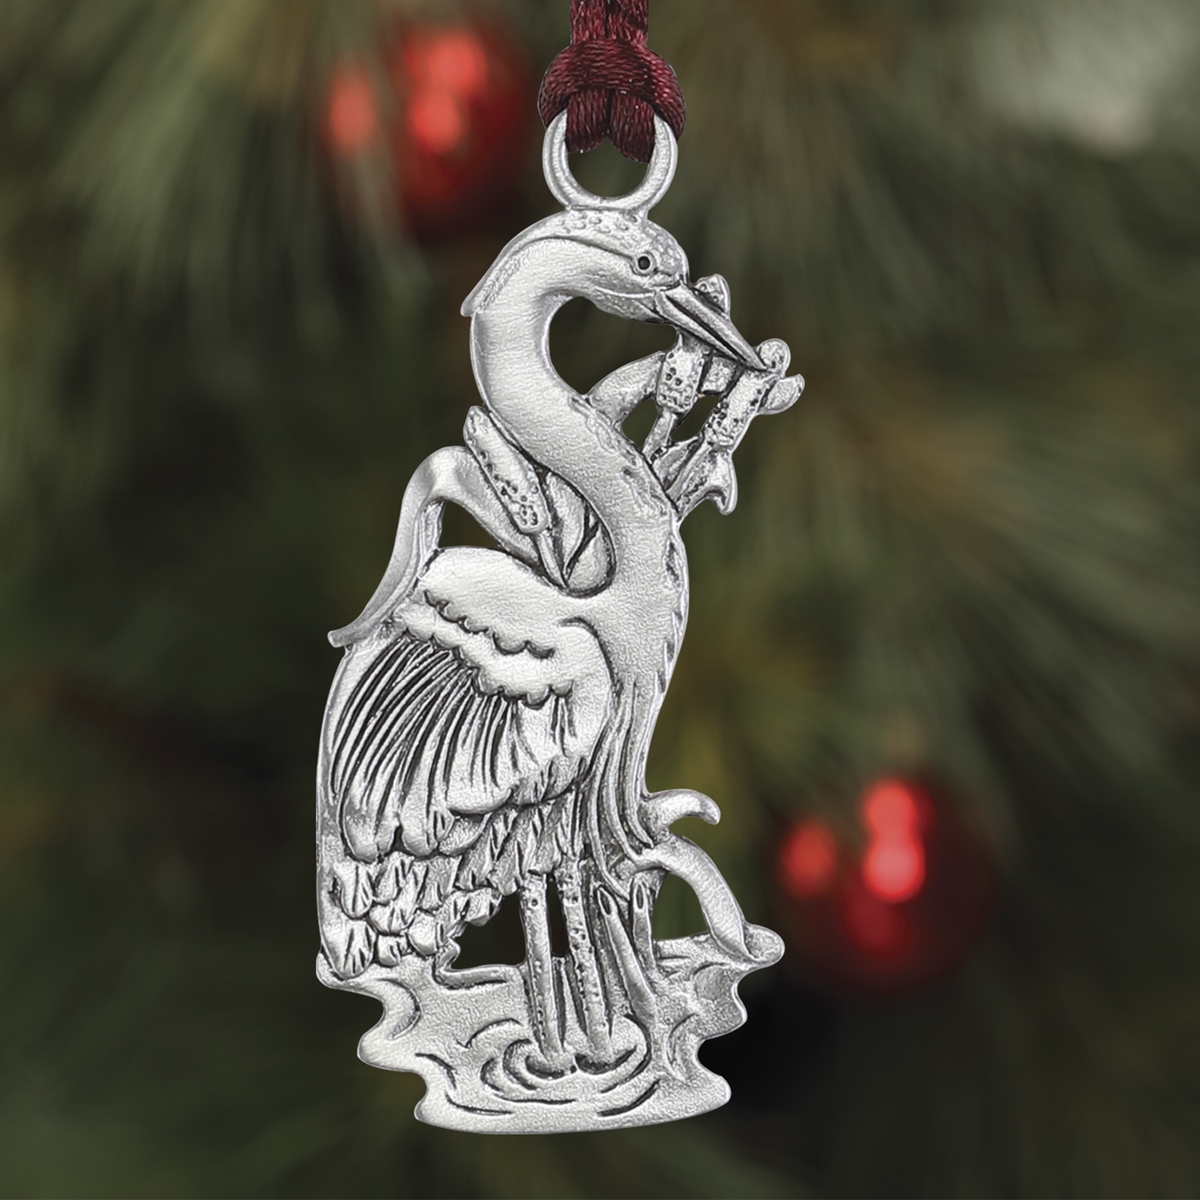 Heron Plant a Tree Ornament